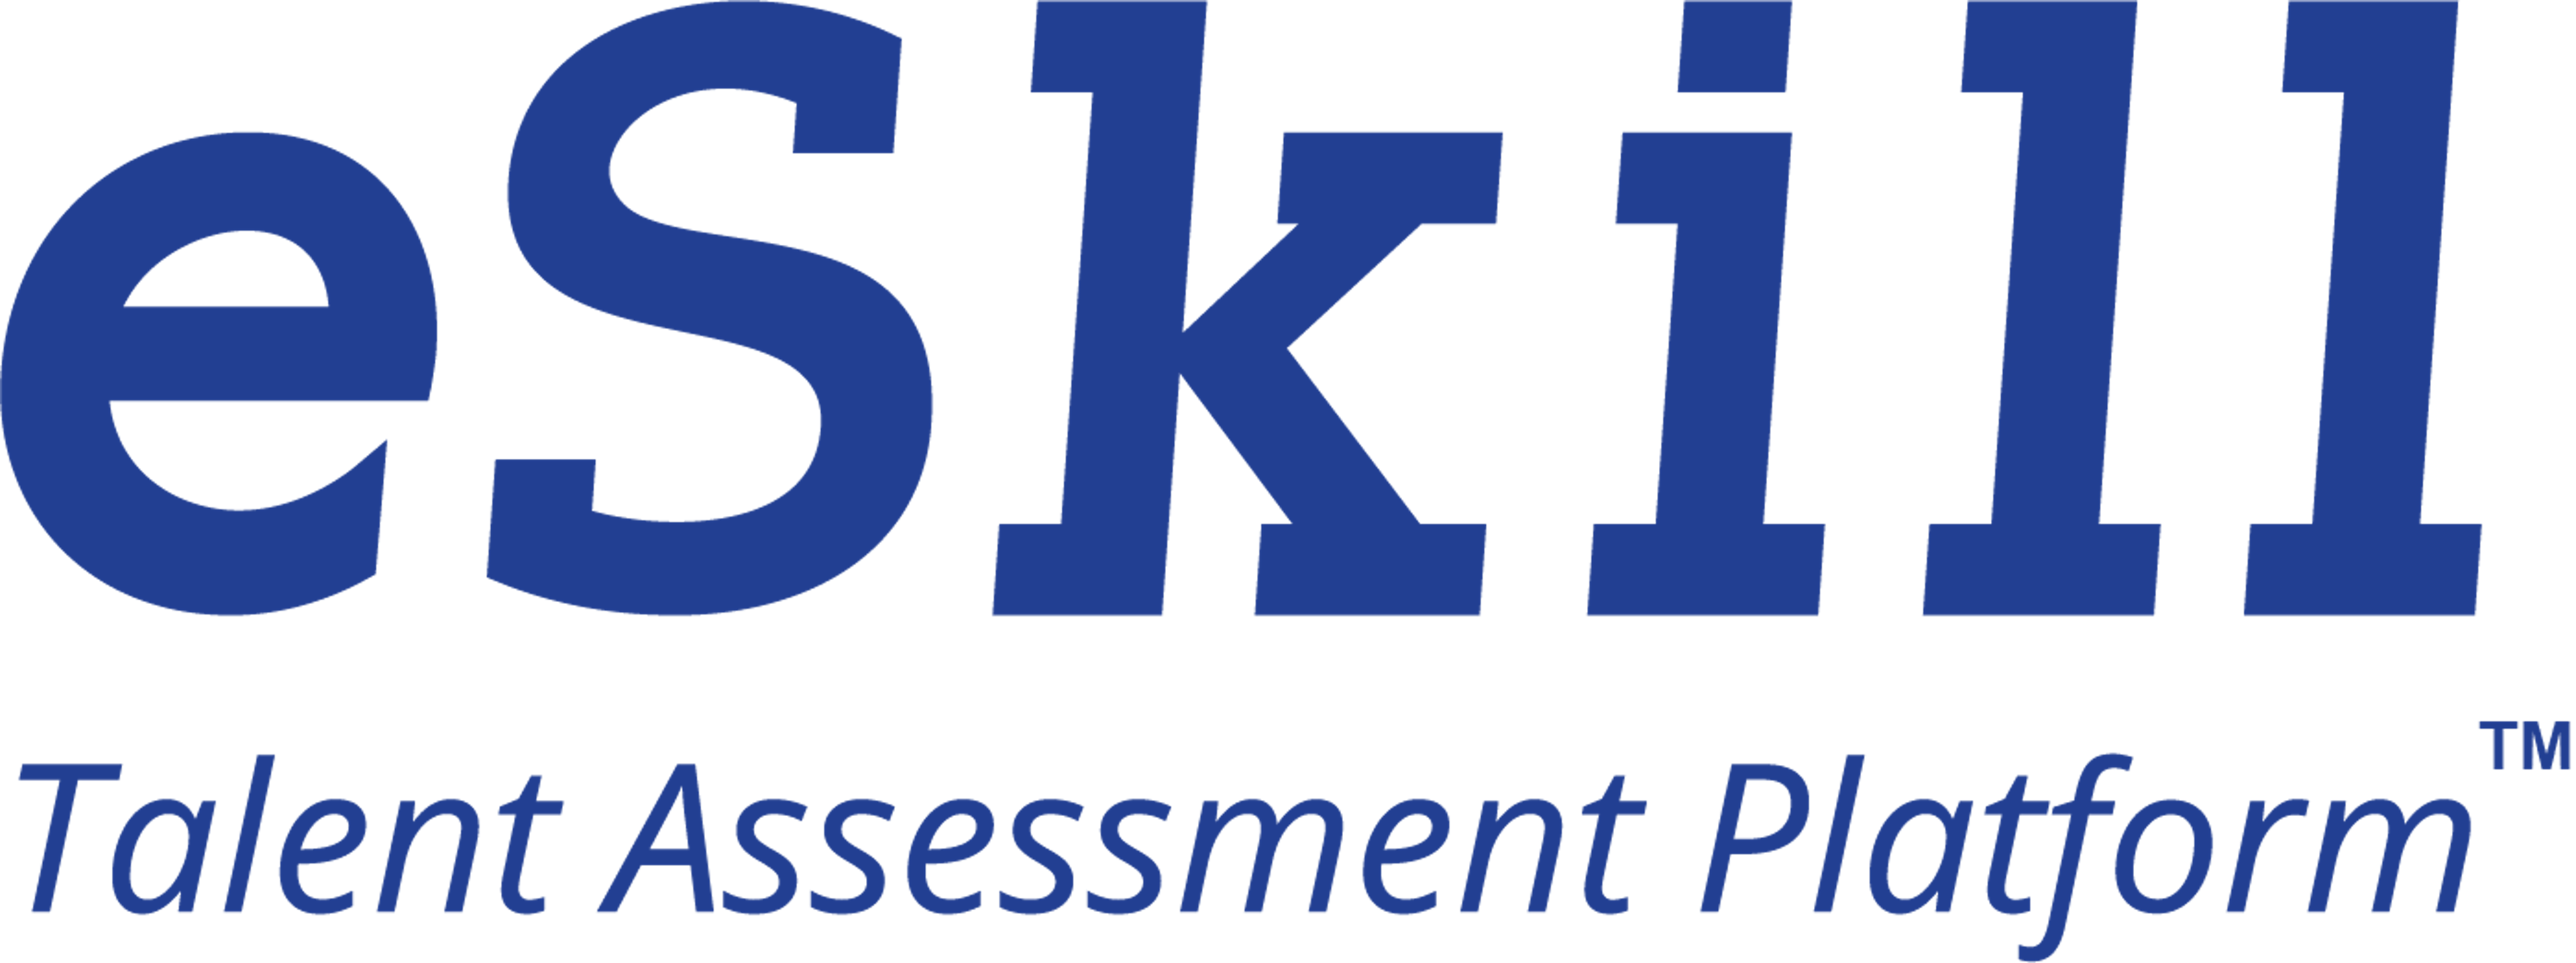 eSkill Logo